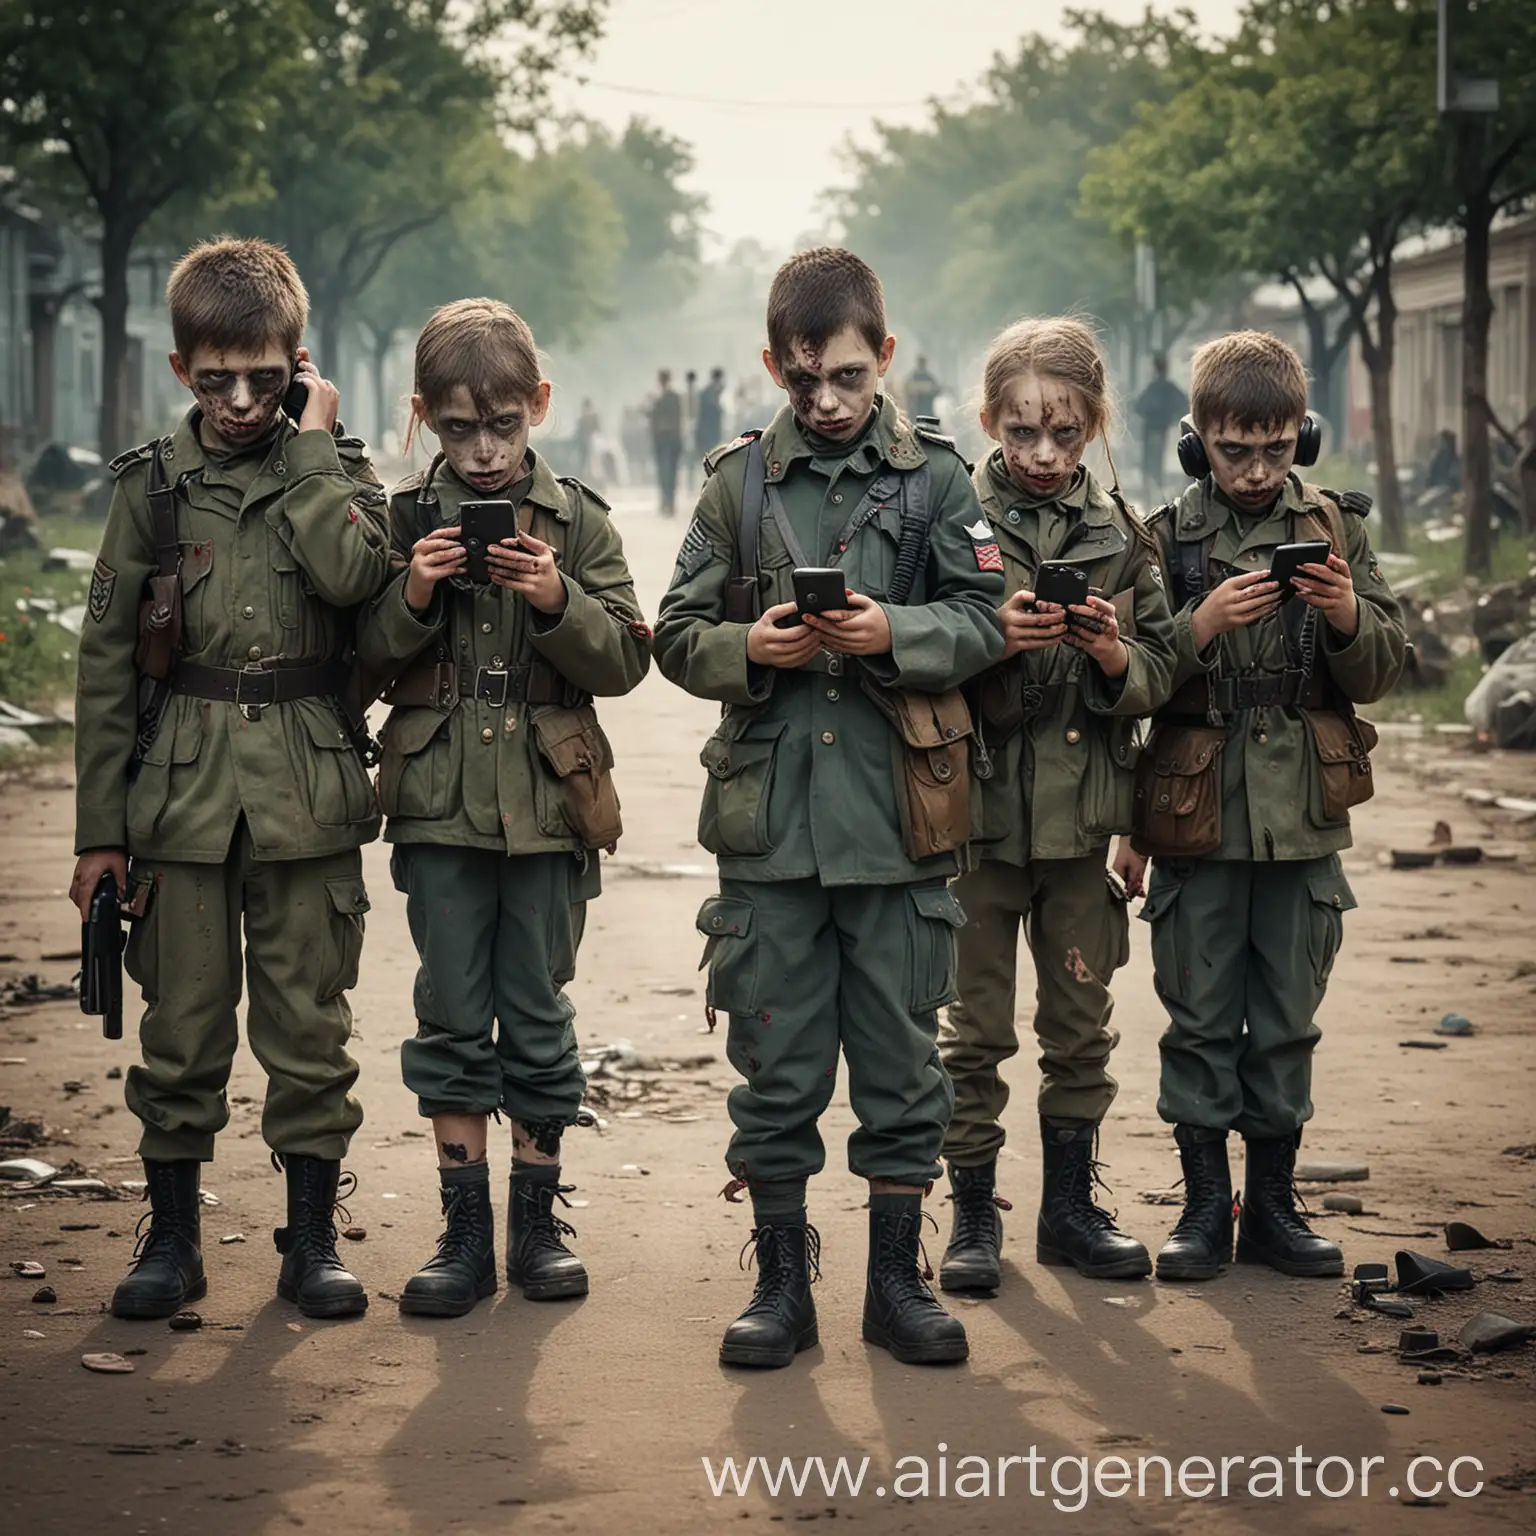 children zombie soldiers with phones